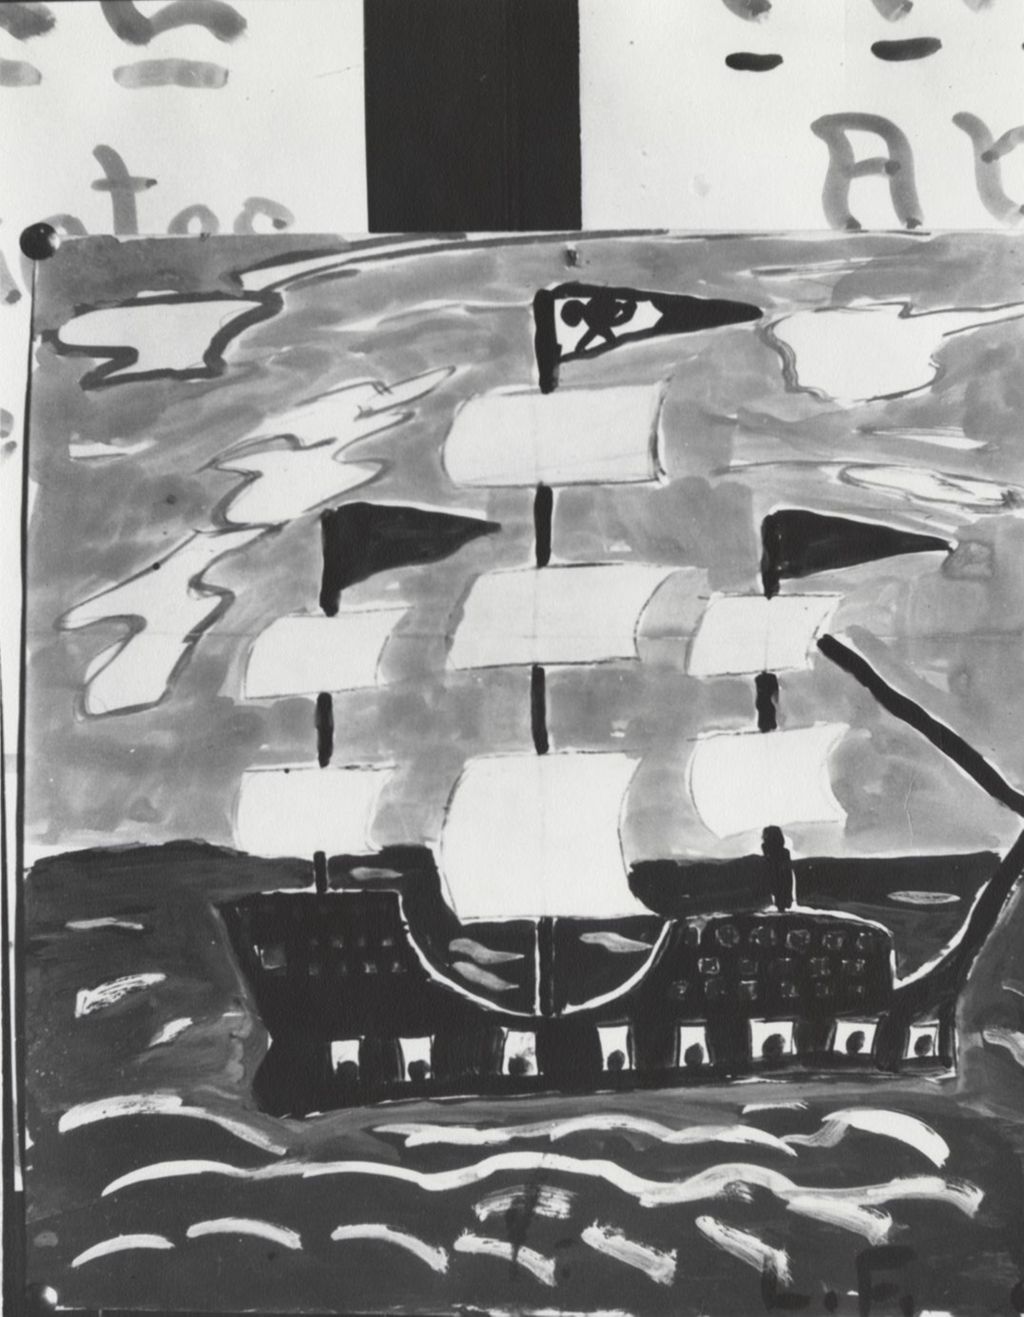 Child's artwork "The Ship"